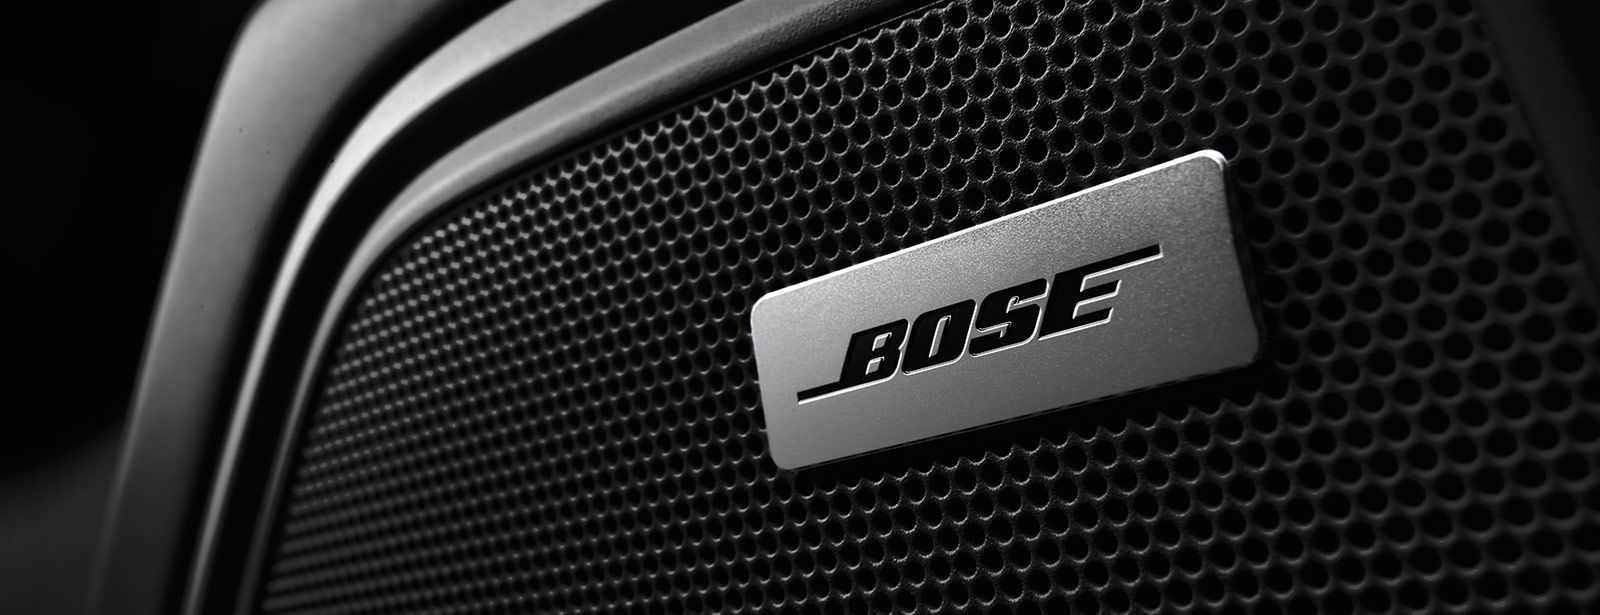 Bose авто. Автомобильная аудиосистема Bose. Акустика Bose Porsche Macan. Bose logo. Bose надпись.